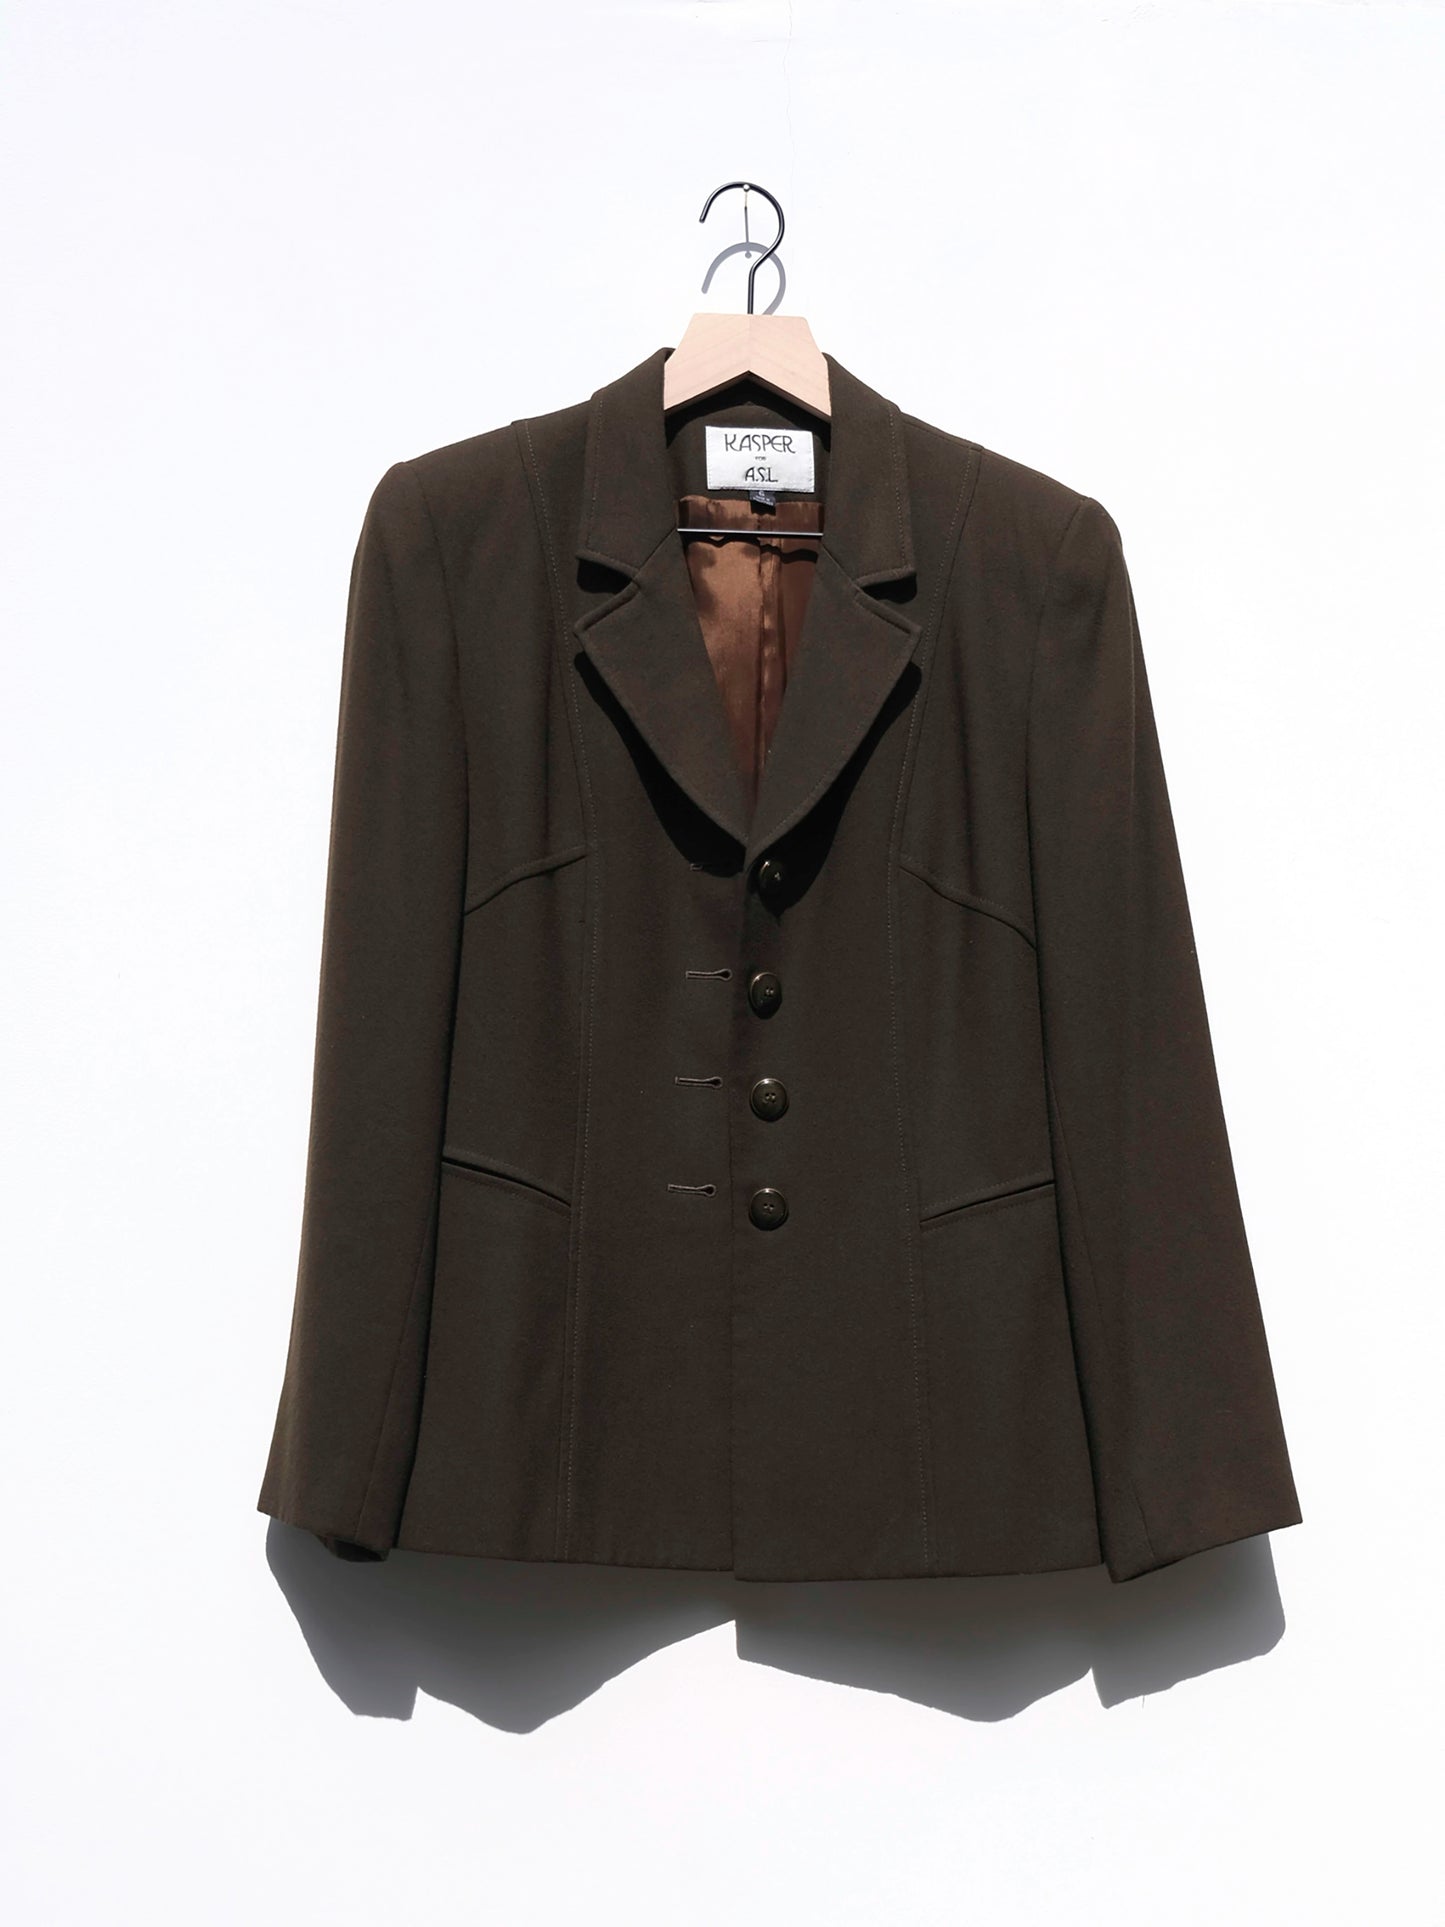 Kasper Olive Green Suit Jacket US 6, 90's Tailored